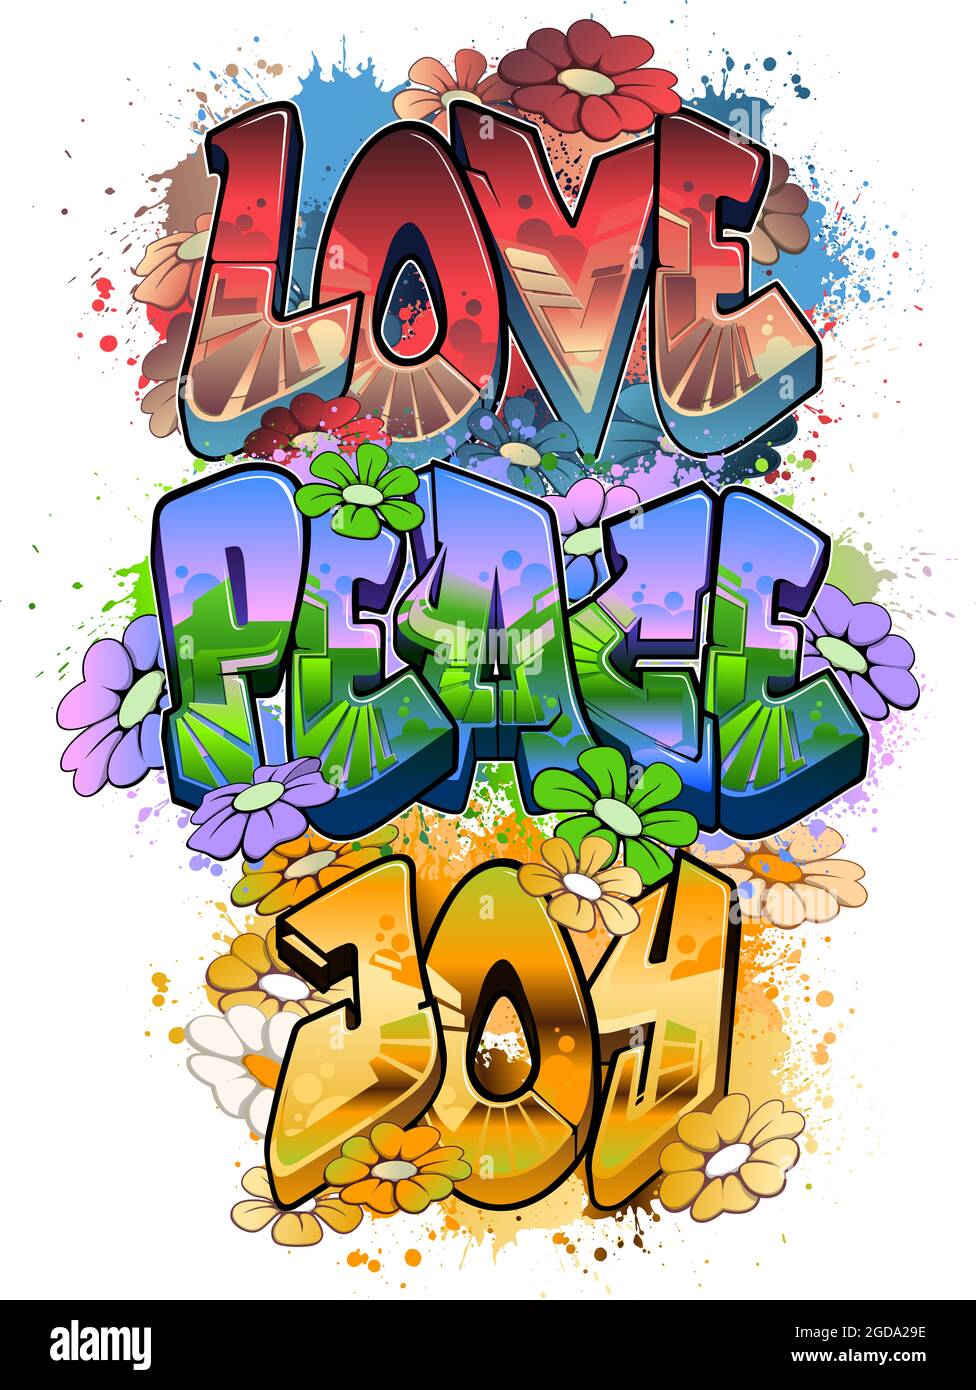 Love Peace Joy in Graffiti Art Stock Photo - Alamy